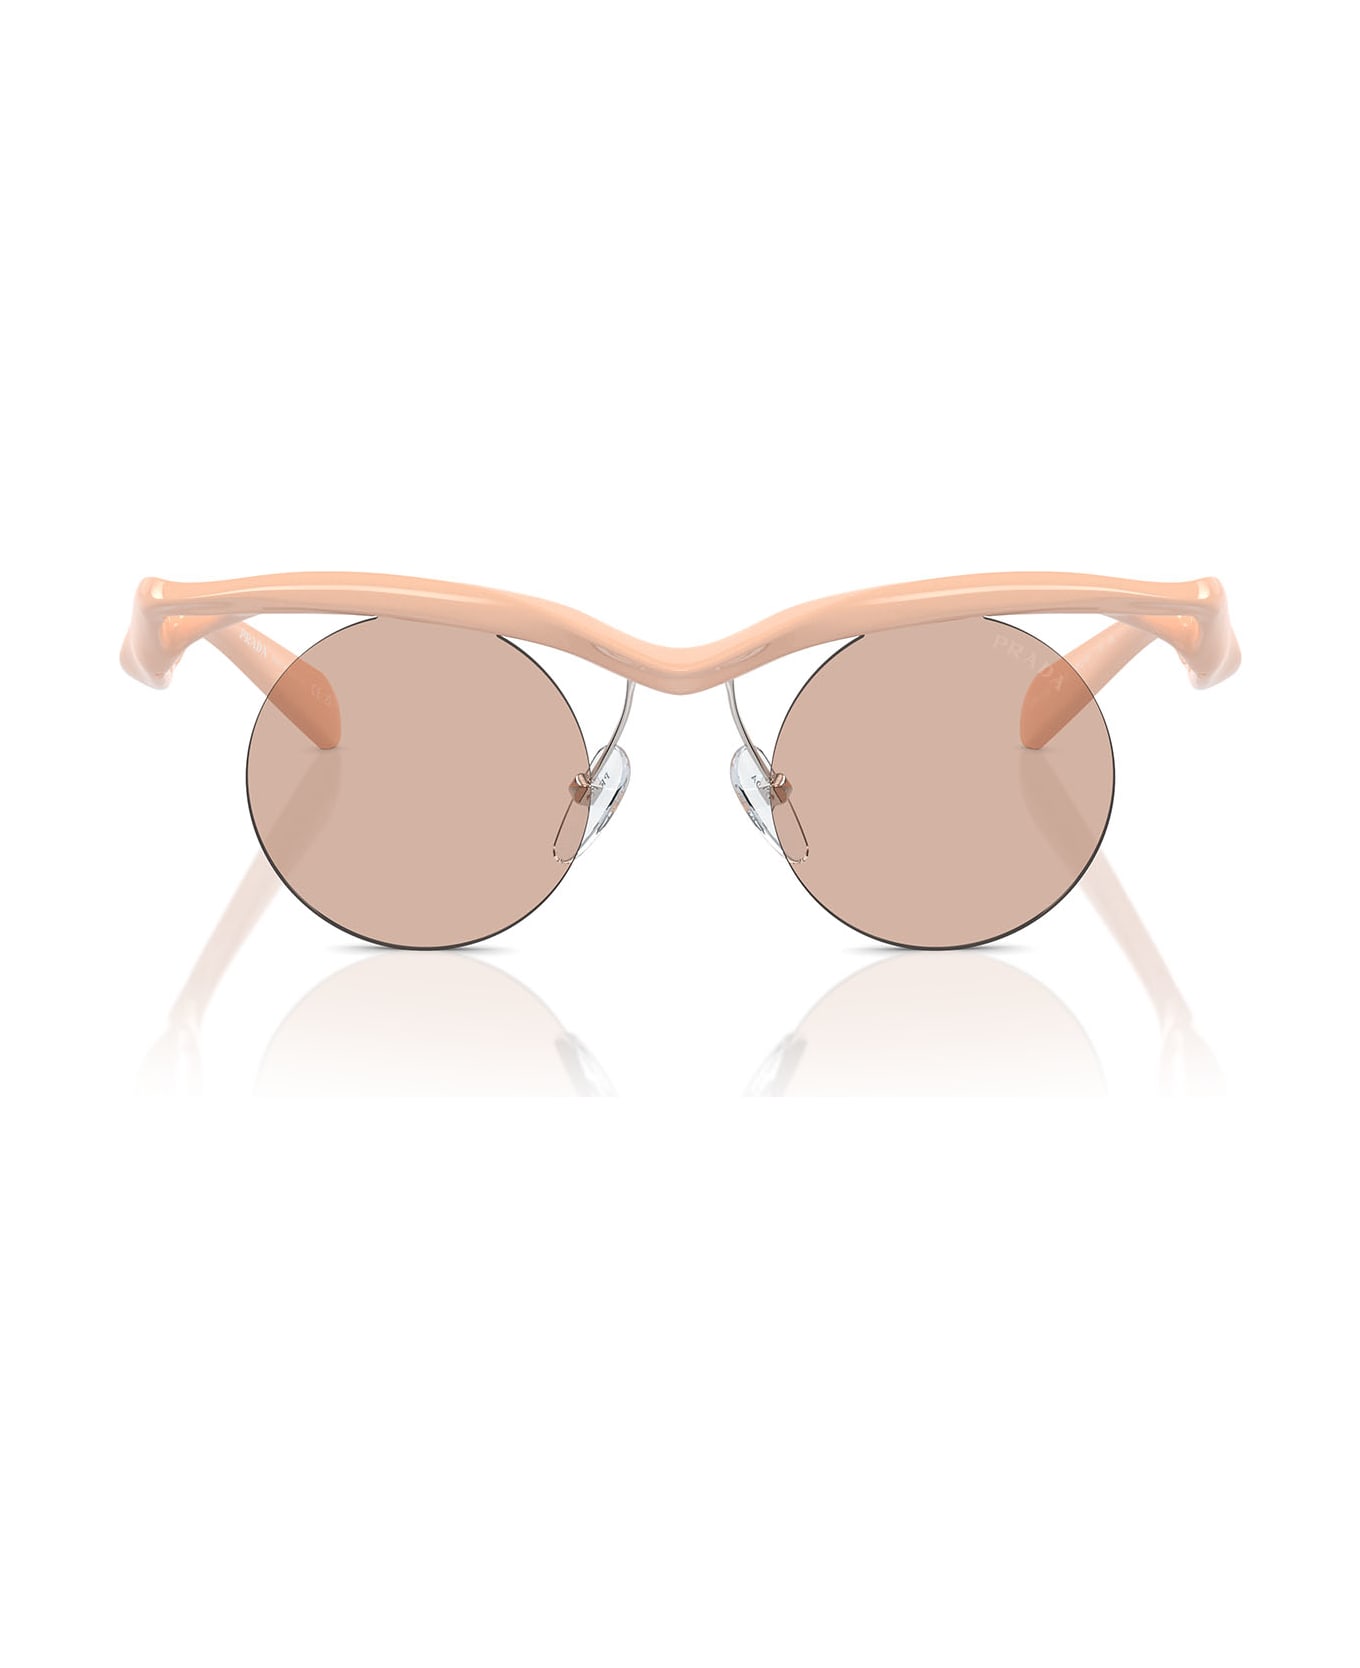 Prada Eyewear Pr A18s Peach Sunglasses - Peach